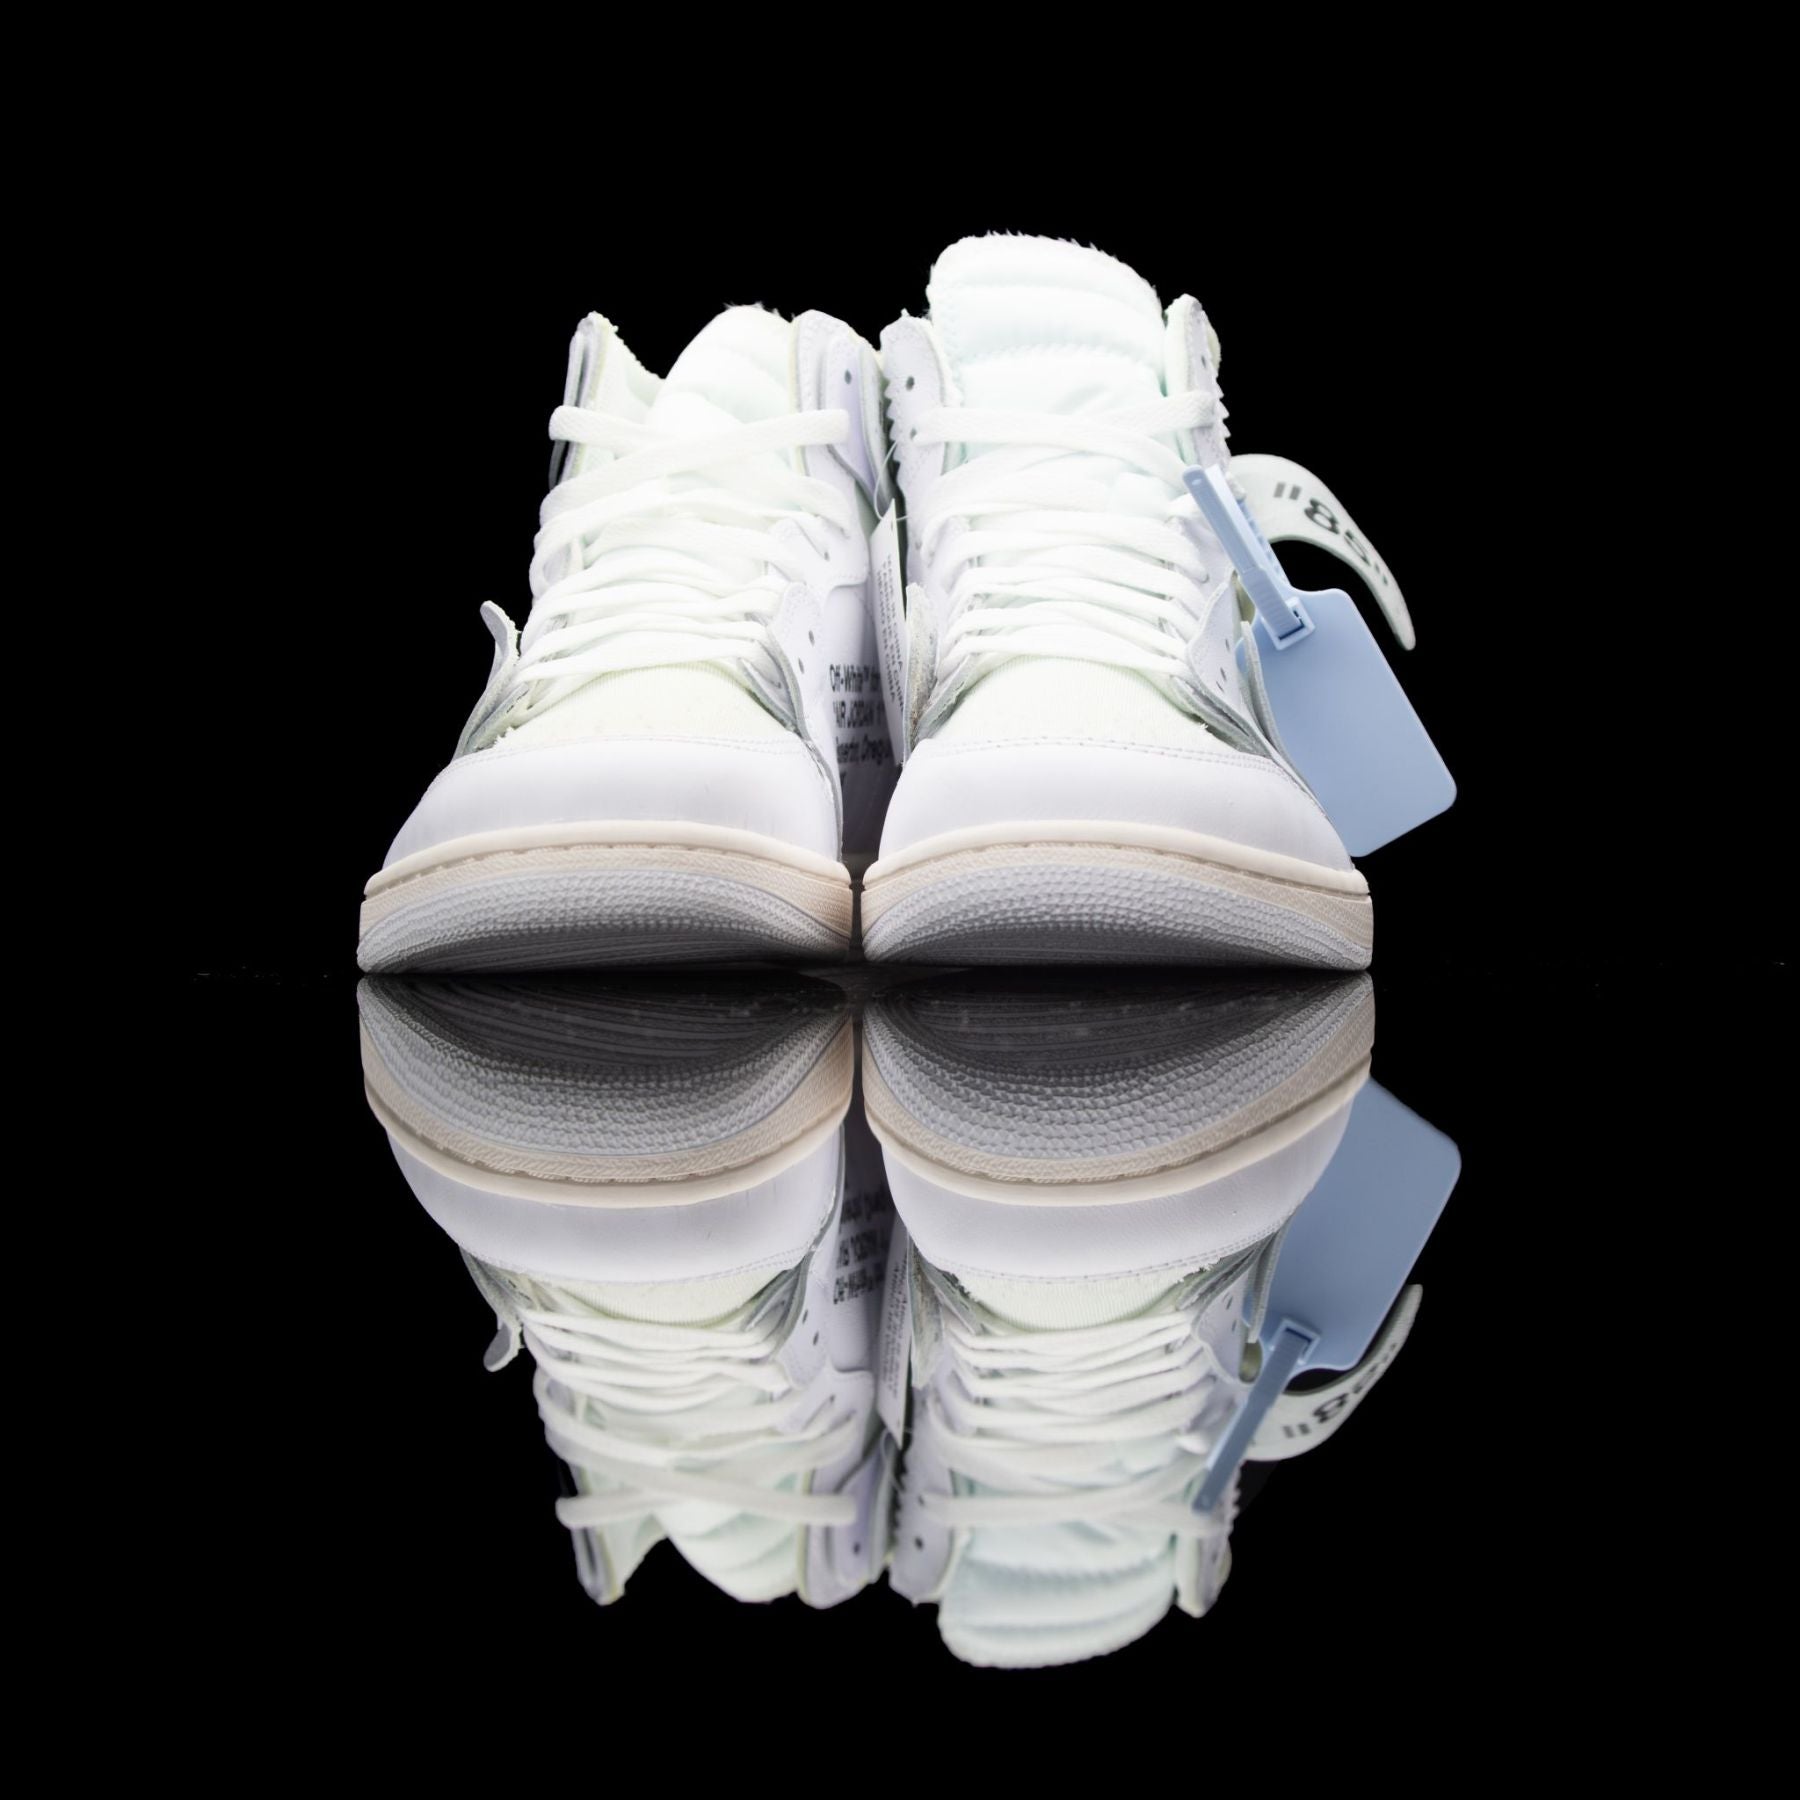 Nike x Off-White Air Jordan 1 Sneakers Sell for 16,120 Euros – WWD